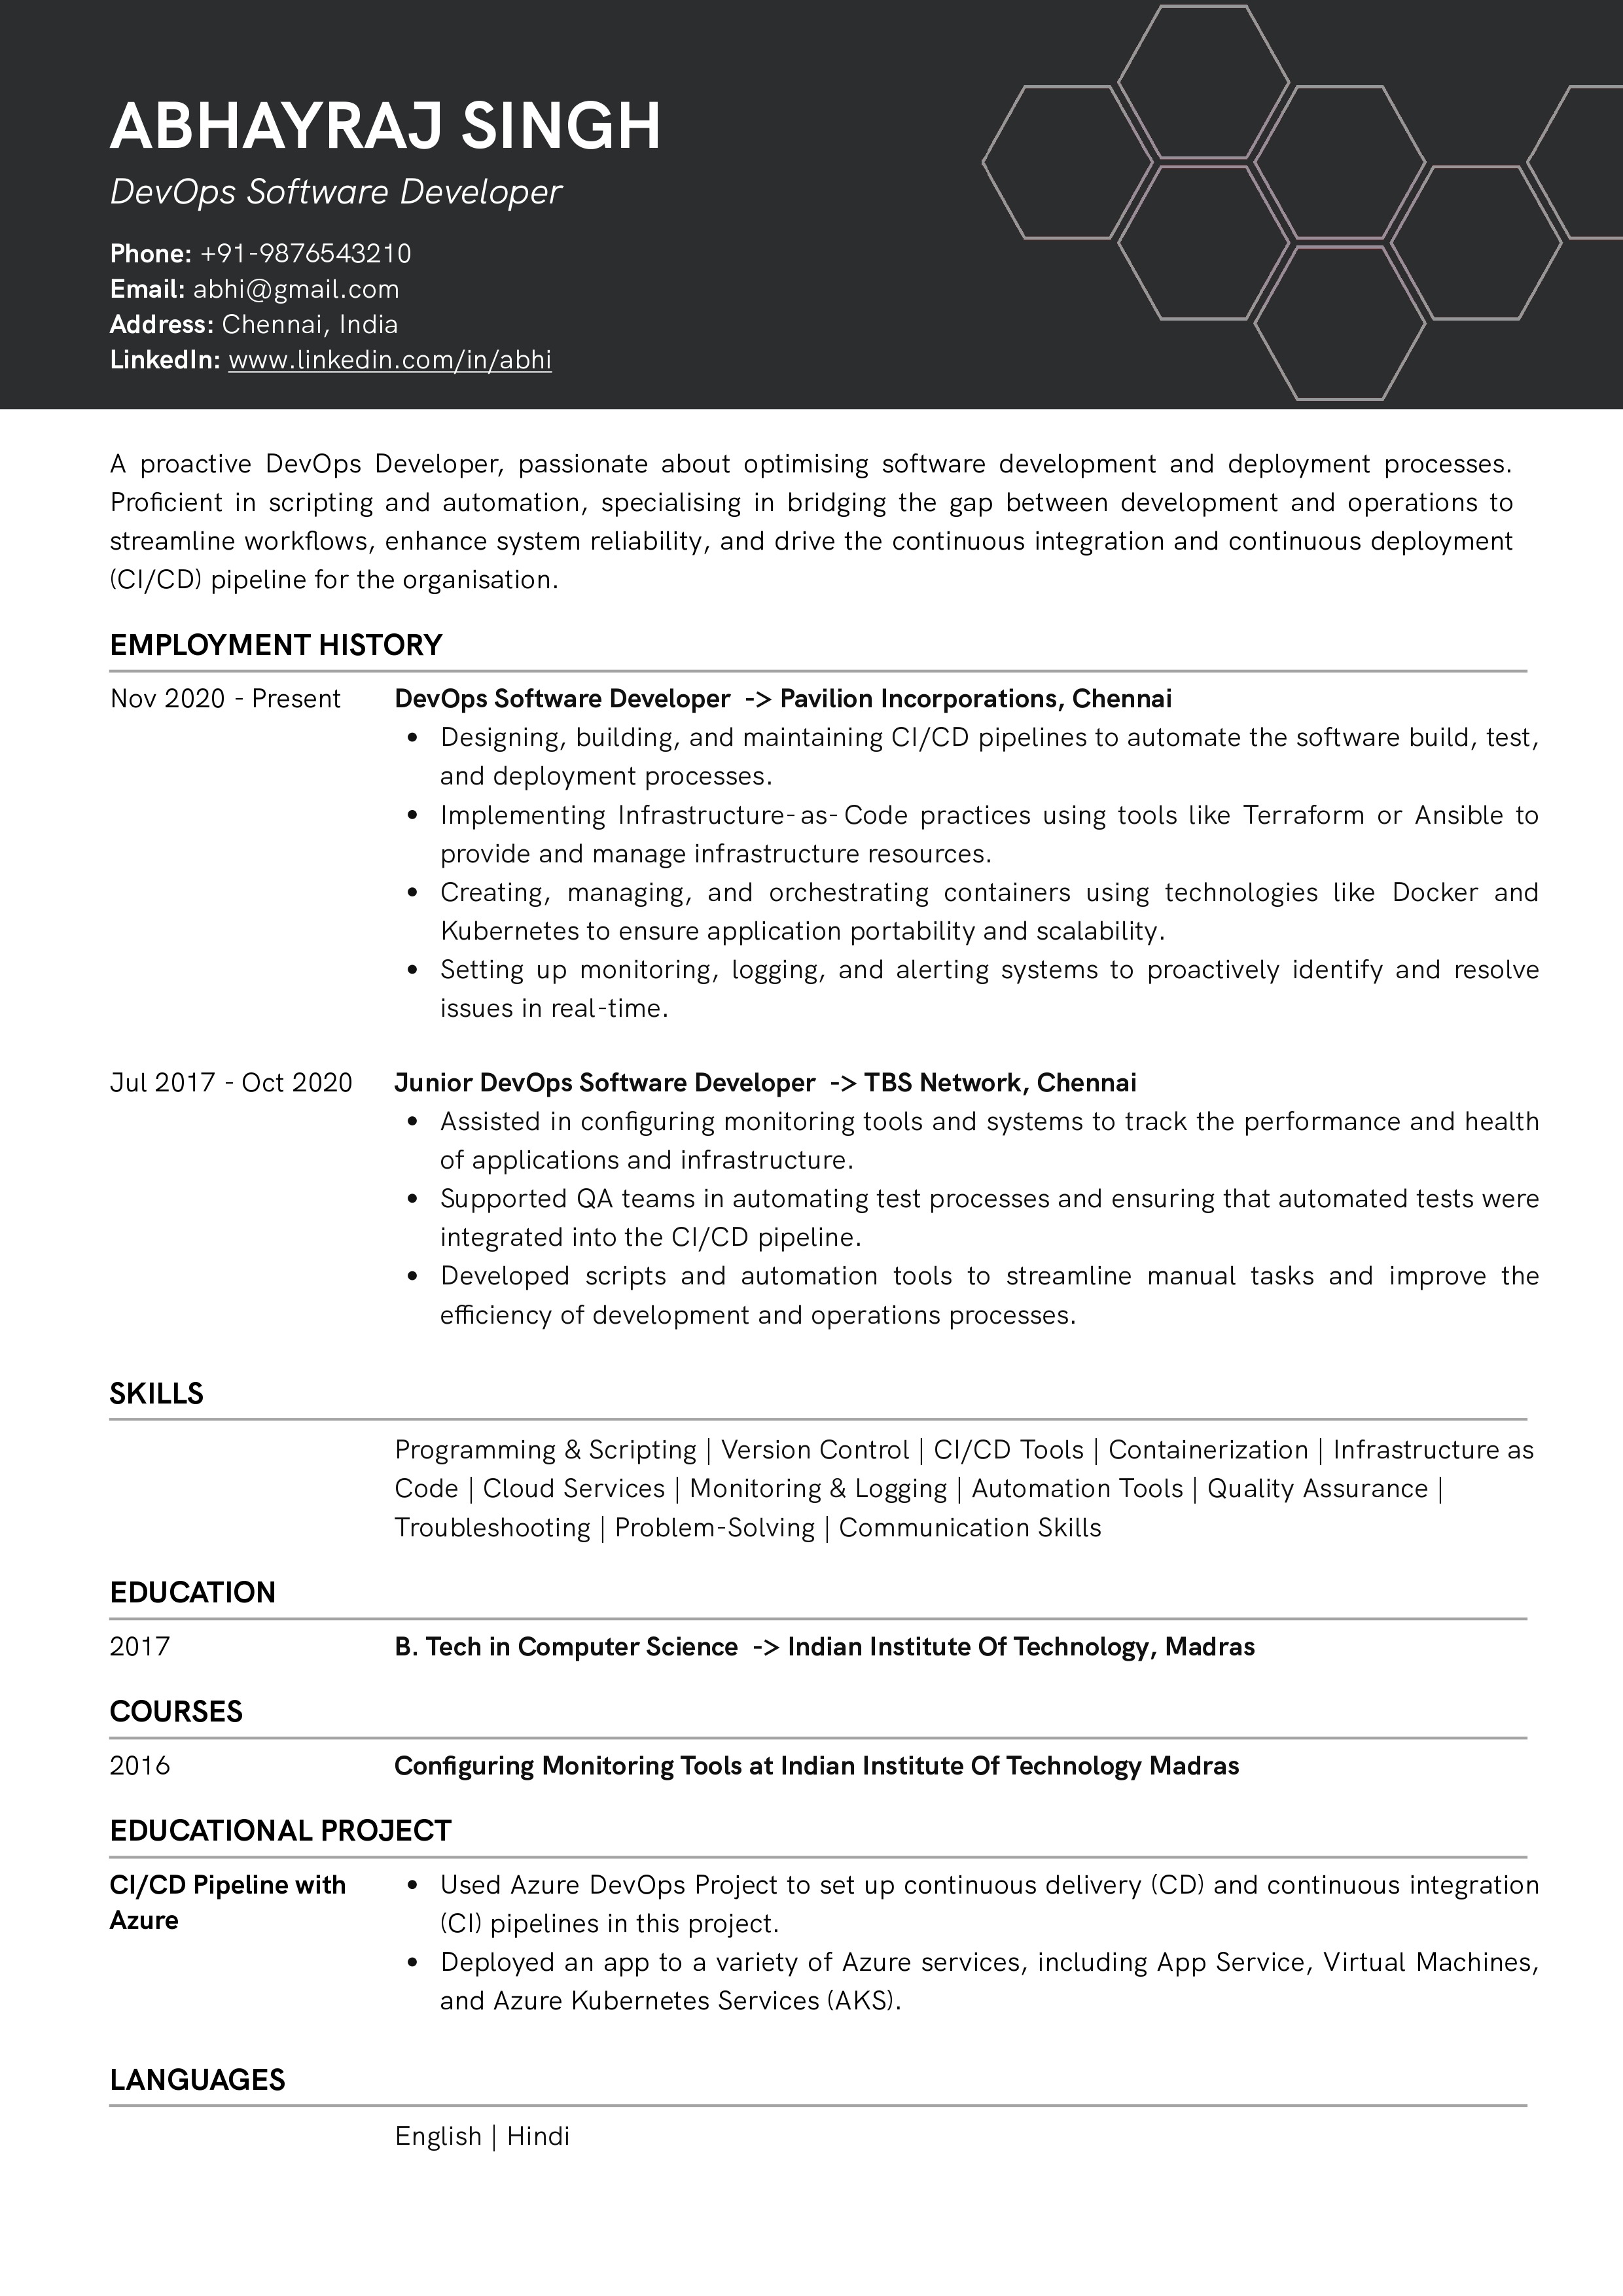 Resume of DevOps Software Developer 